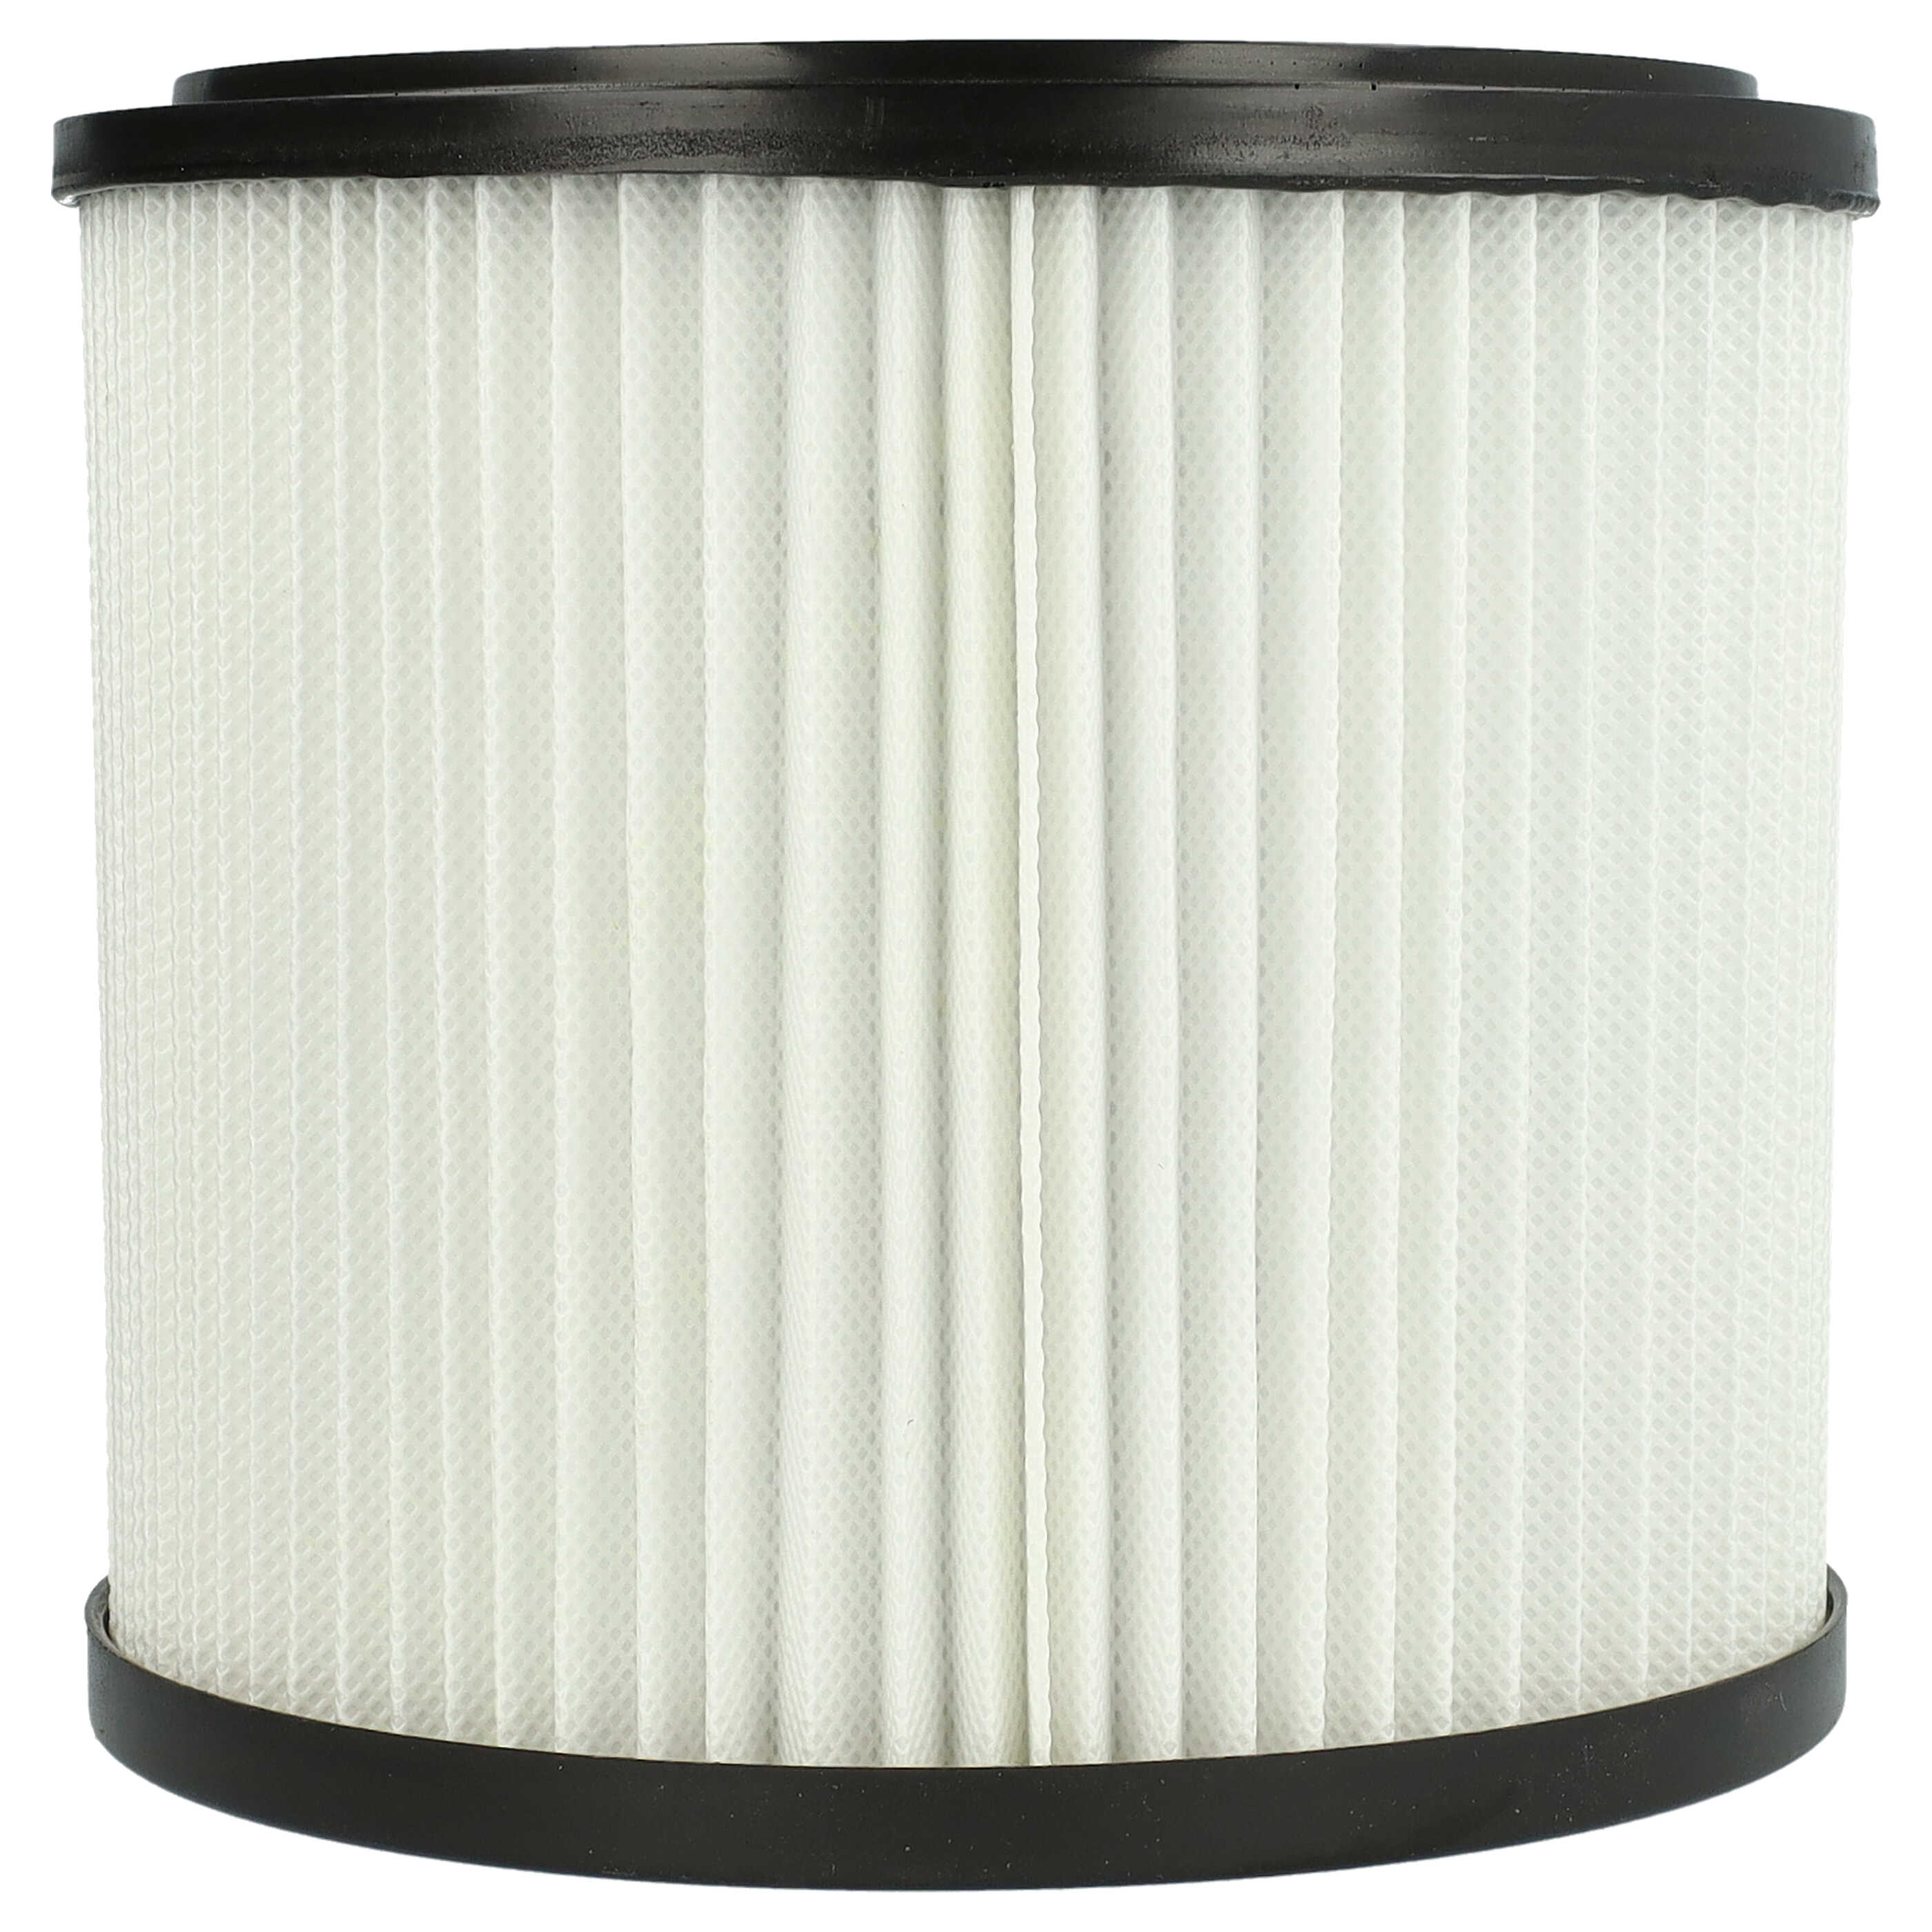 Filtro reemplaza Einhell 2351110 para aspiradora filtro de cartucho, negro / blanco